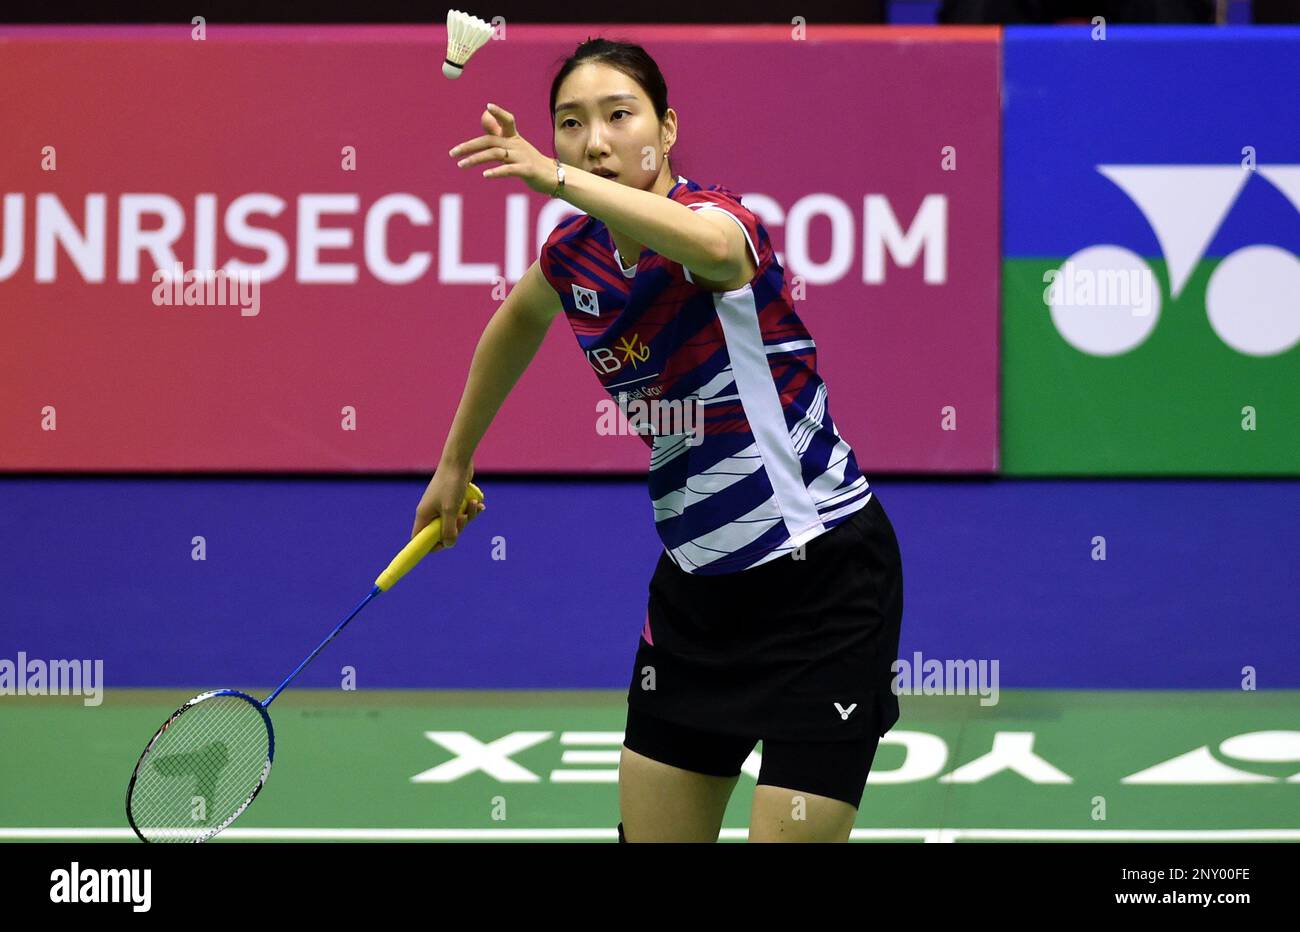 Sung Ji-hyun of South Korea serves against Tai Tzu-ying of Chinese Taipei in their semifinal match of the womens singles during the YONEX-SUNRISE Hong Kong Open Badminton Championships 2017 at the Hong